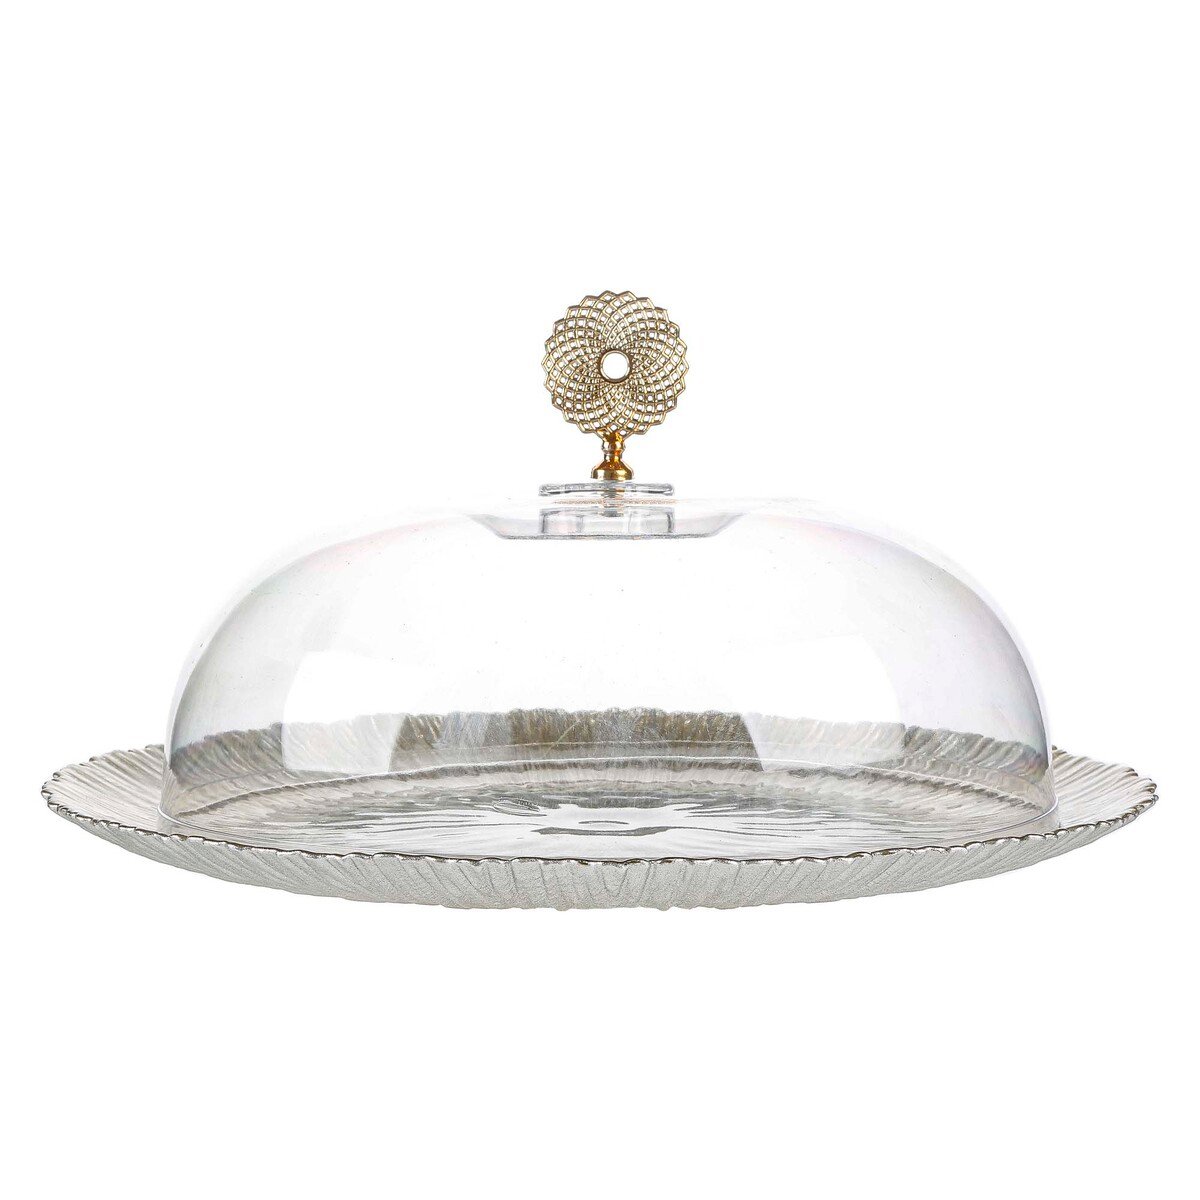 Glascom Glass Base With Acrylic Dome Decorative Bowl, 30 cm, FV28